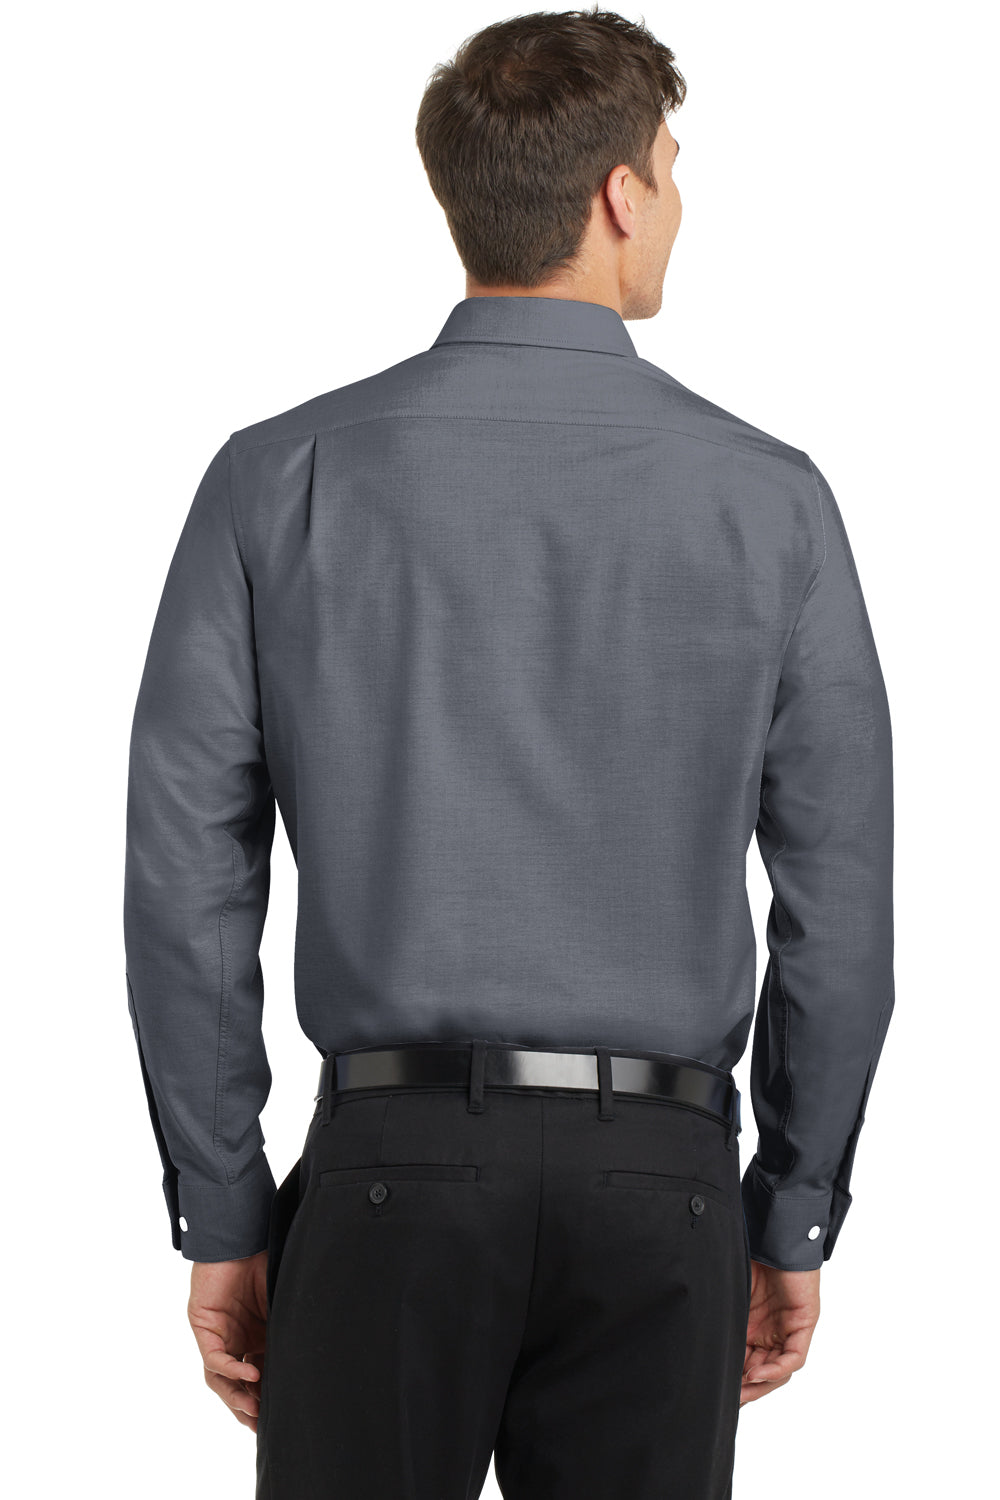 Port Authority S658 Mens SuperPro Oxford Wrinkle Resistant Long Sleeve Button Down Shirt w/ Pocket Black Back